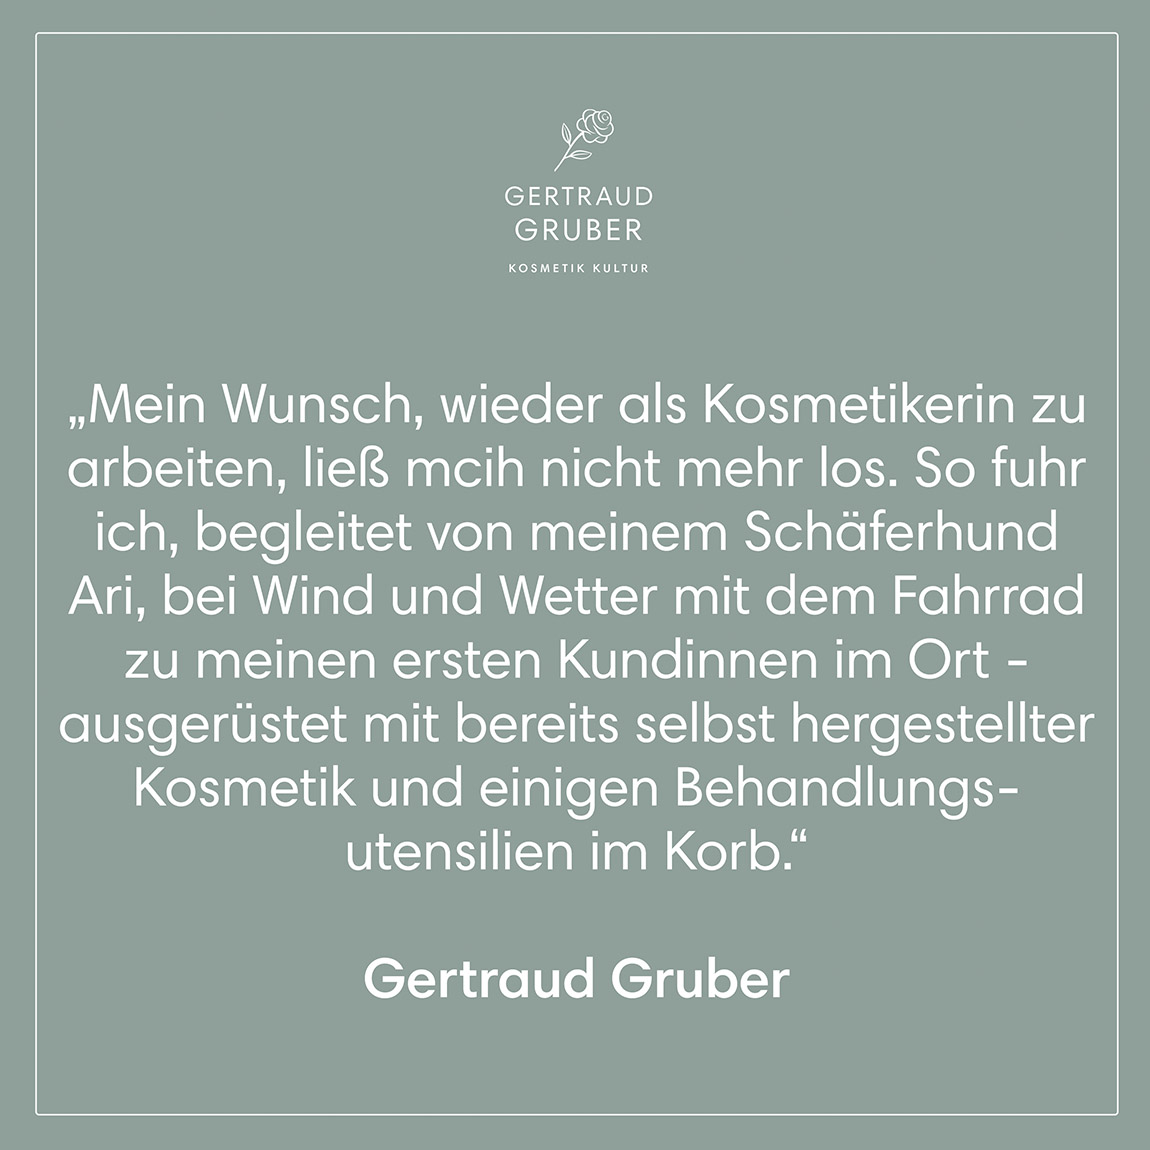 Gertraud Gruber: The pioneer of holistic cosmetics